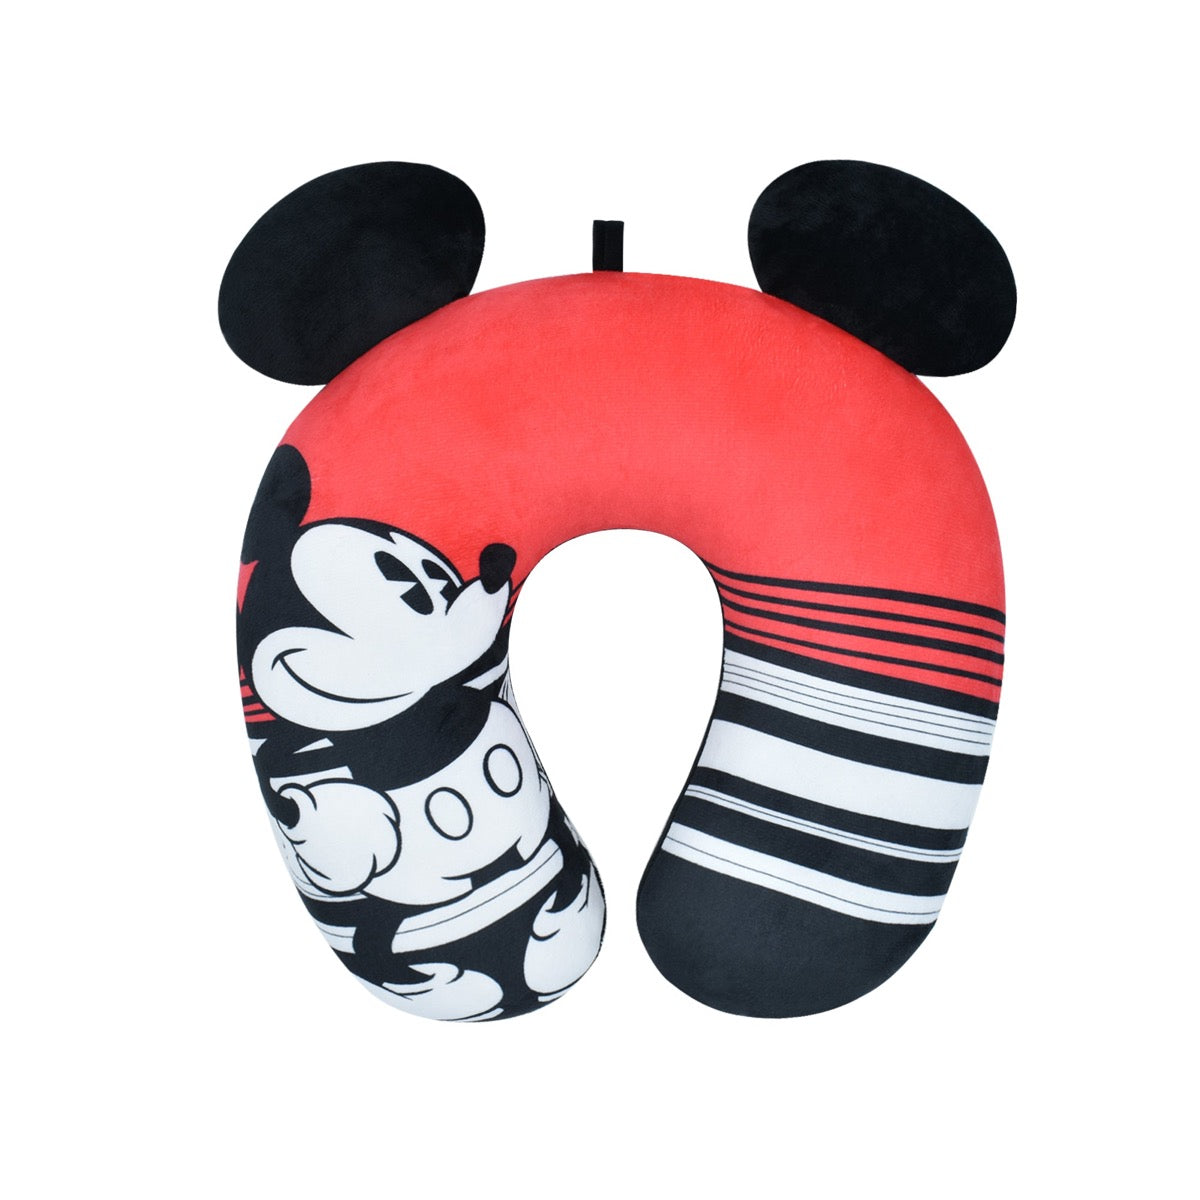 Disney Mickey Mouse stripes travel neck pillow red black white